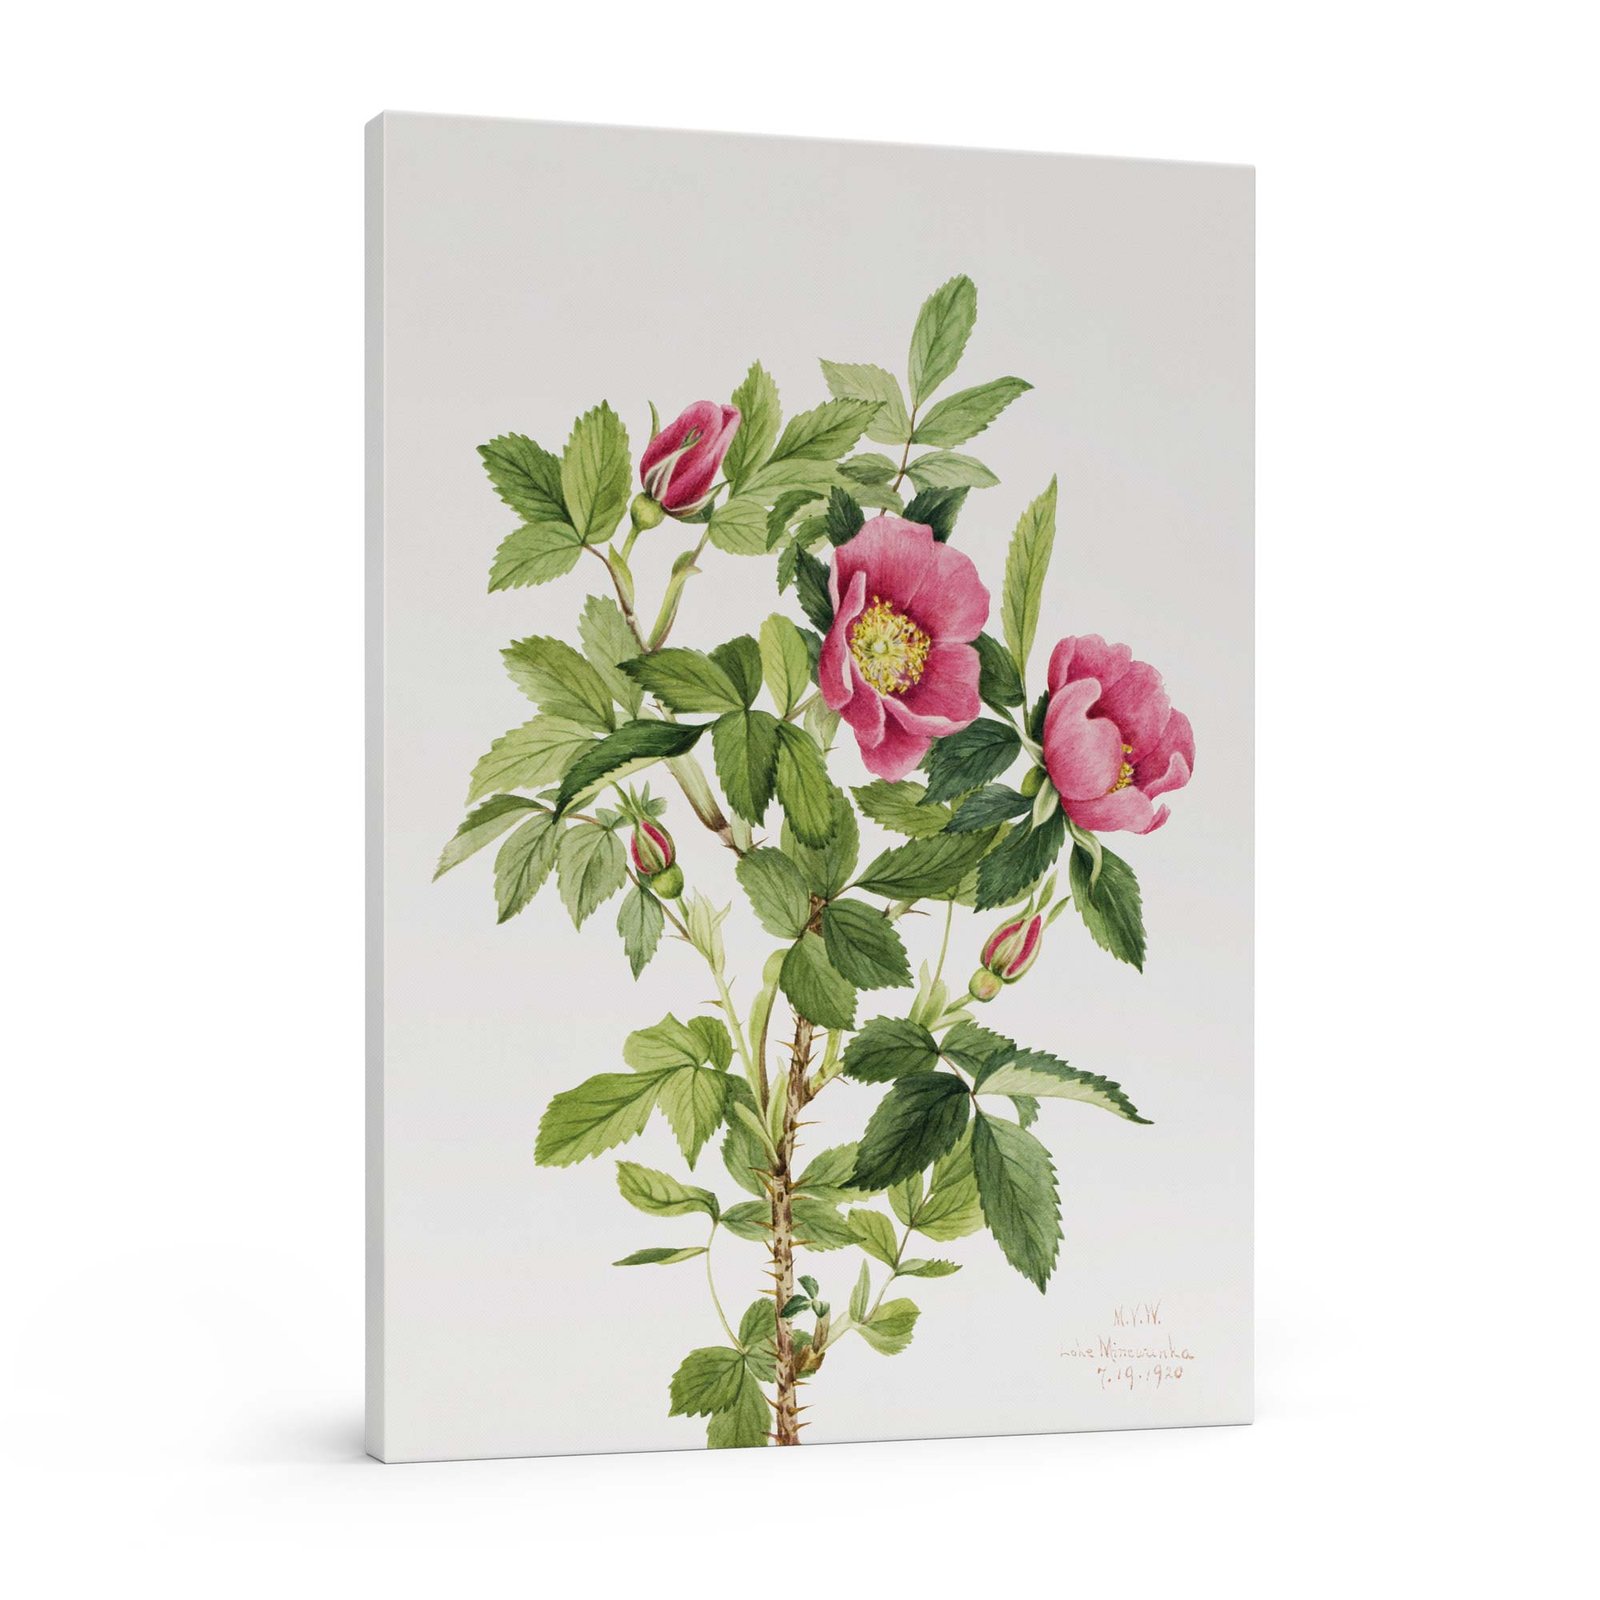 261-grazus paveikslai - Rožė Bourgeau - Mary Vaux Walcott